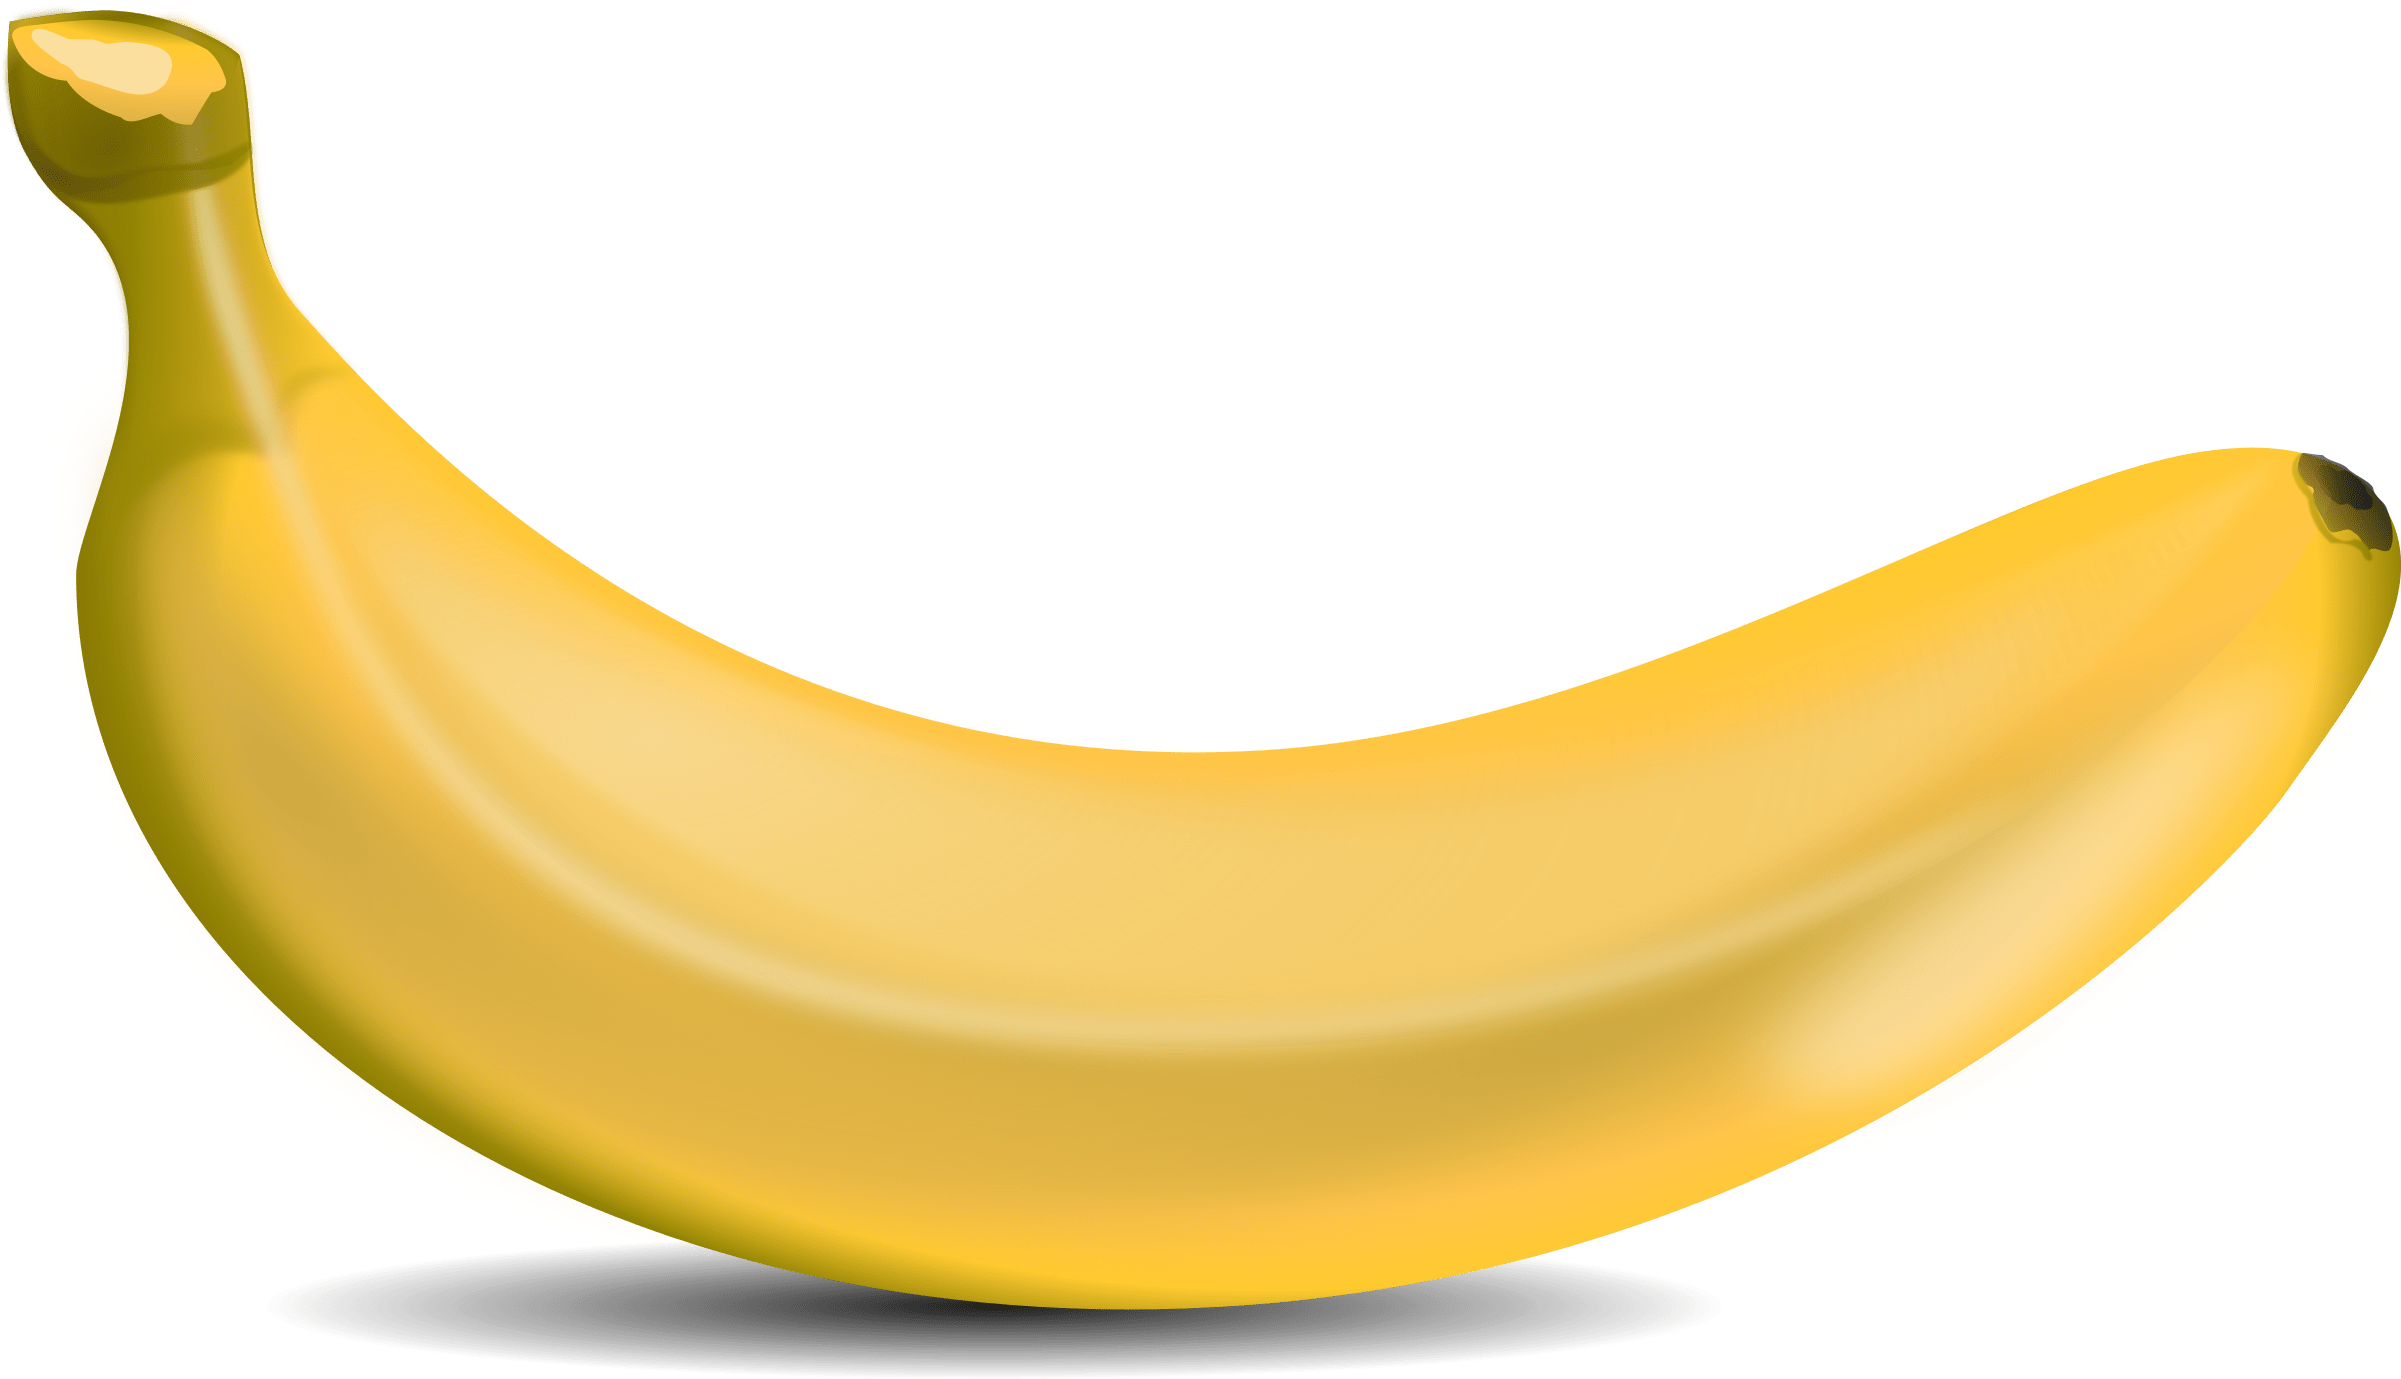 Free Banana Clipart Transparent Download Free Banana Clipart Transparent Png Images Free